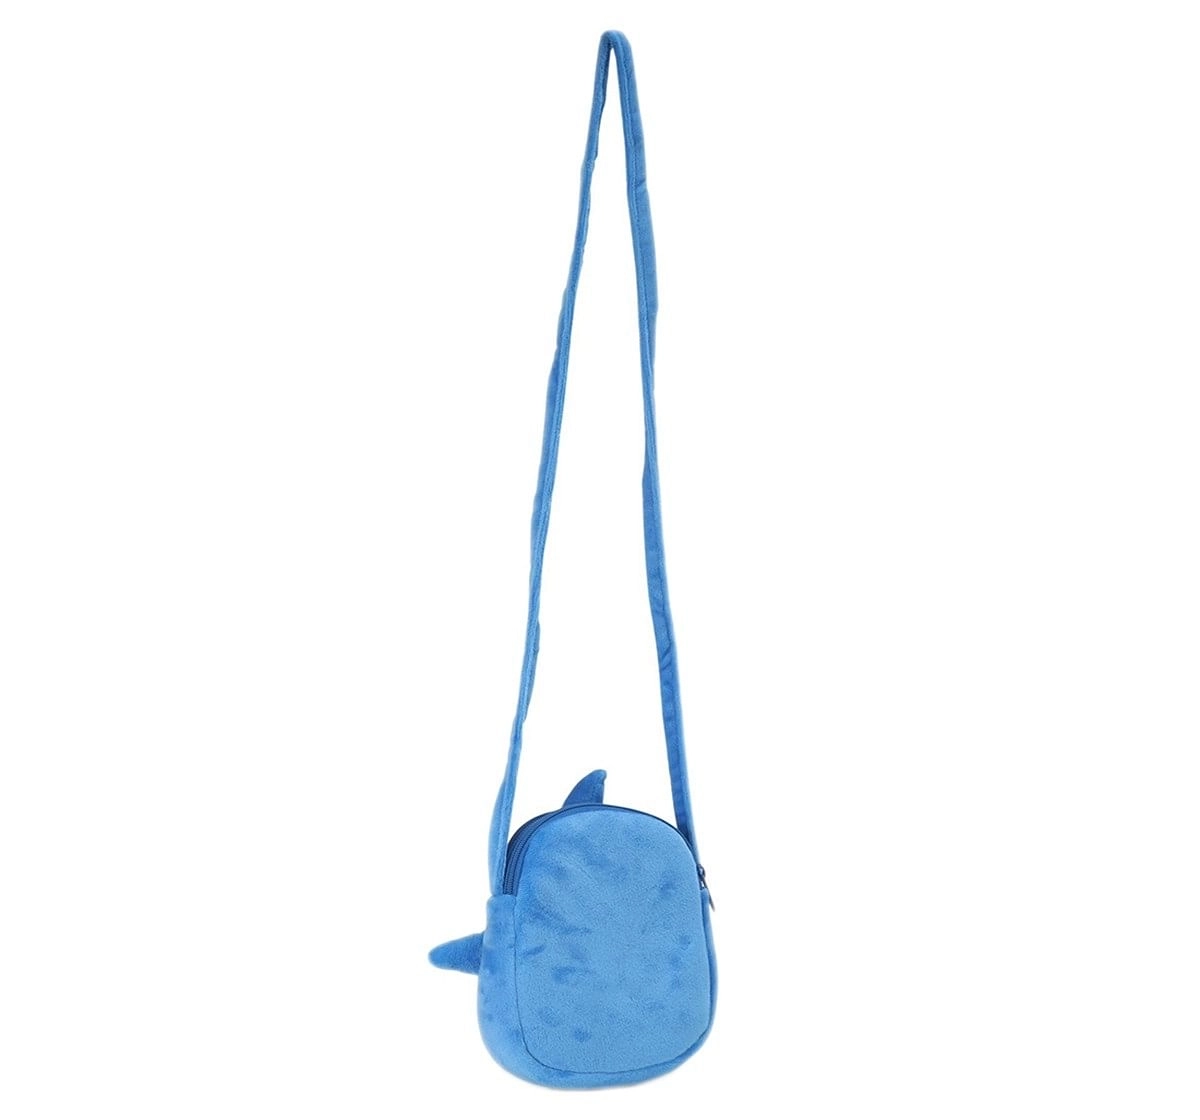 Baby Shark Daddy Shark Sling Bag, 0M+ (Blue)